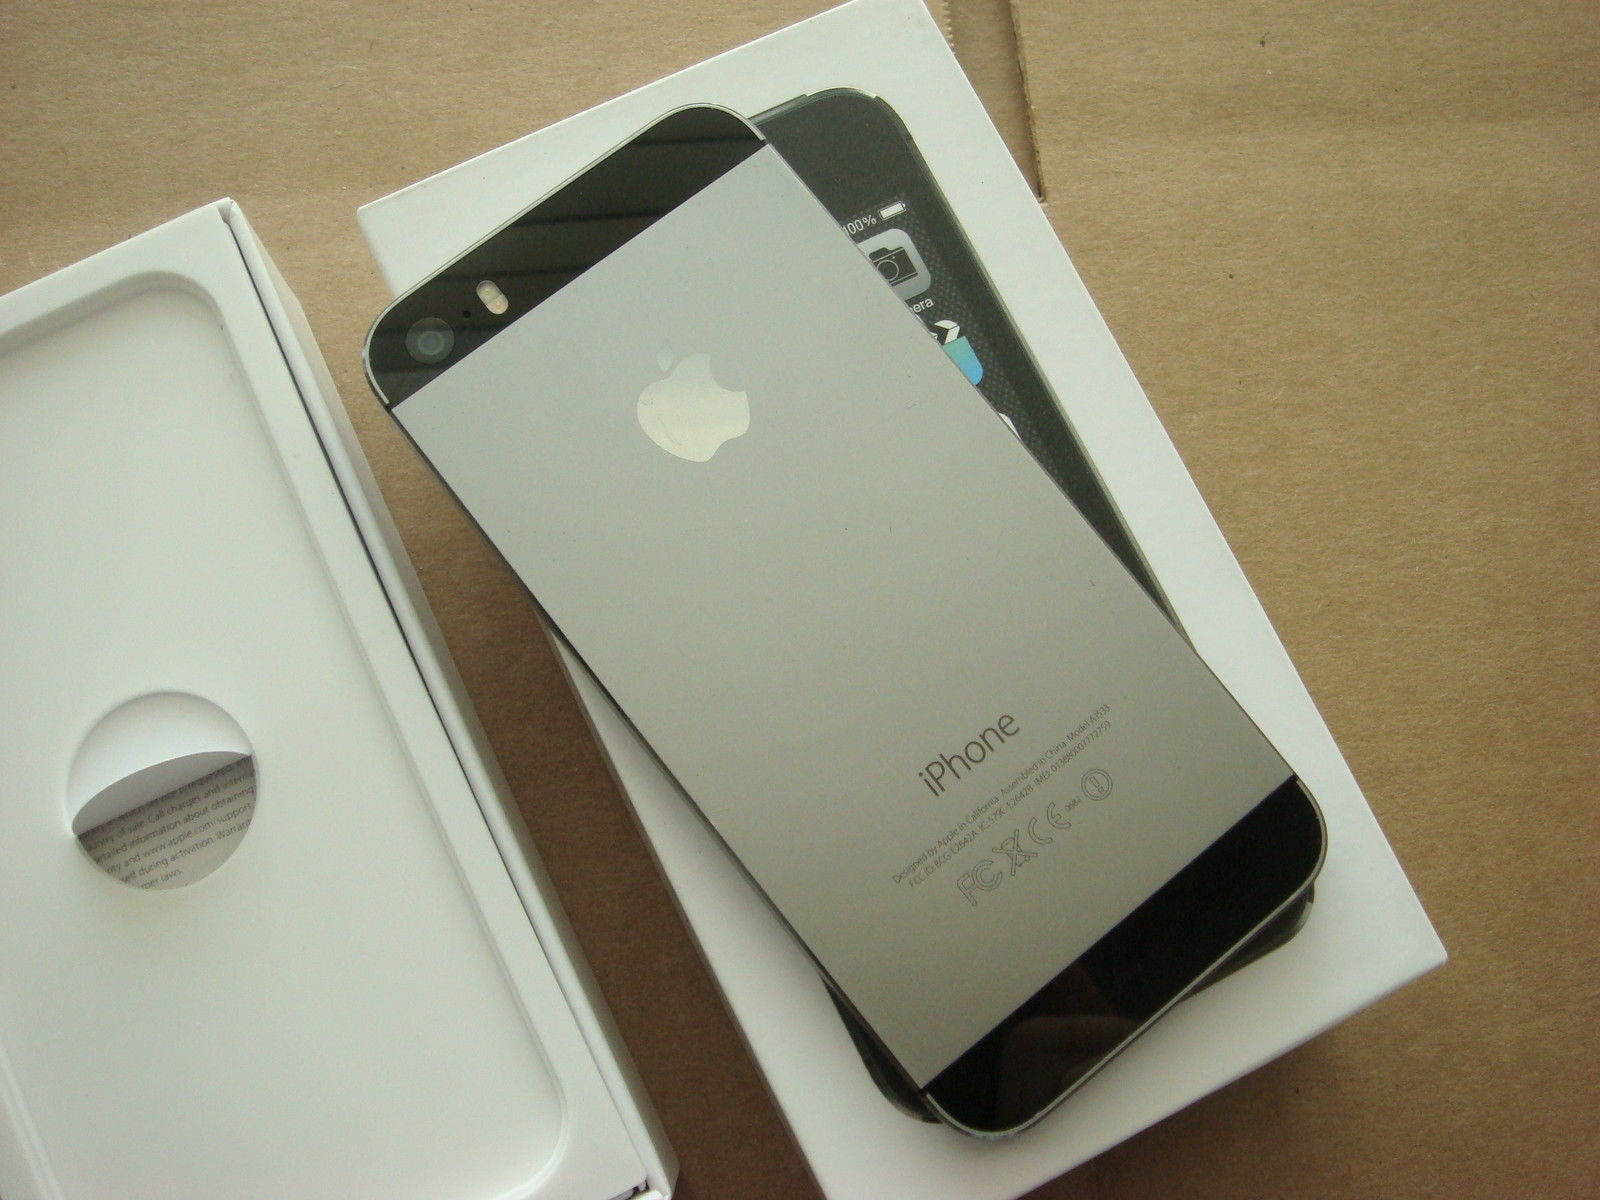 Apple IPhone 5S (последняя модель) - 16GB - Космос Серый (Factory Unlocked) Smartphone